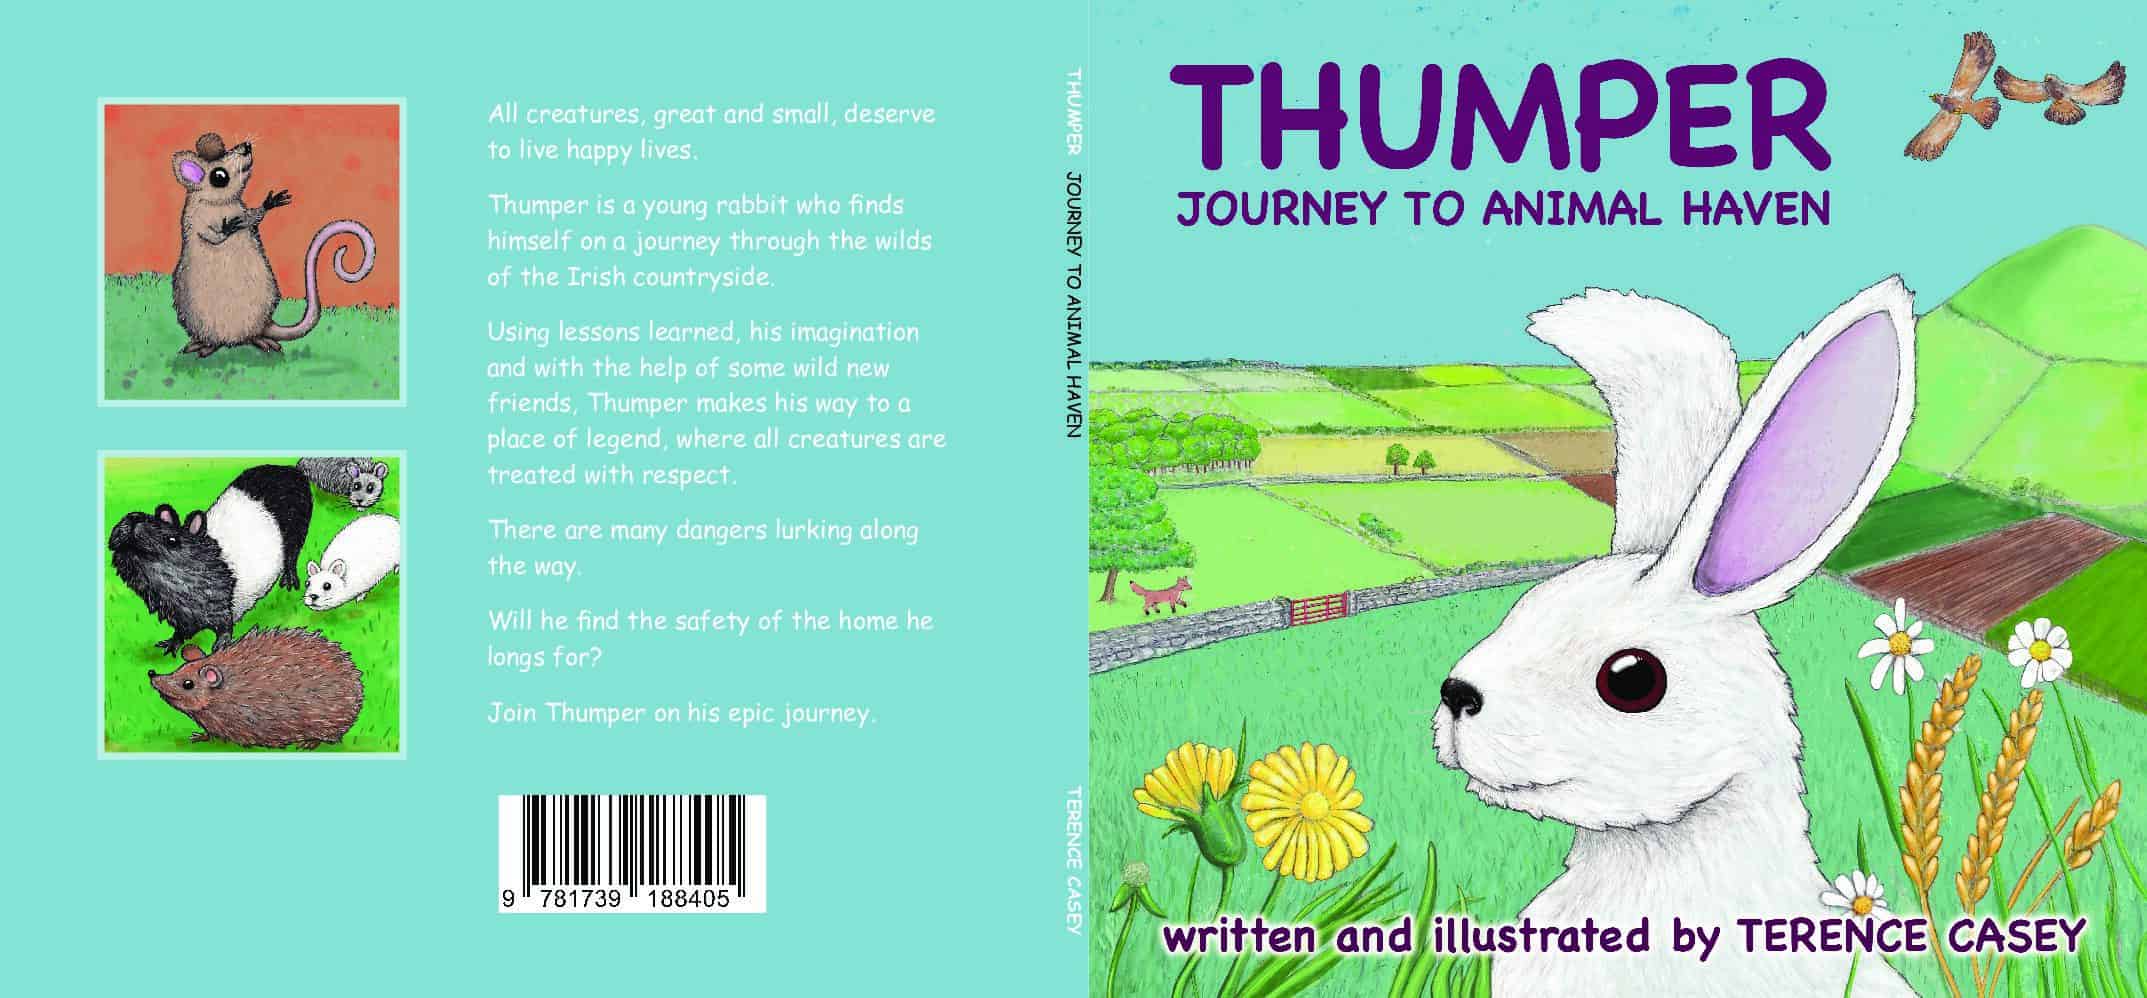 Thumper cover art pdf 2